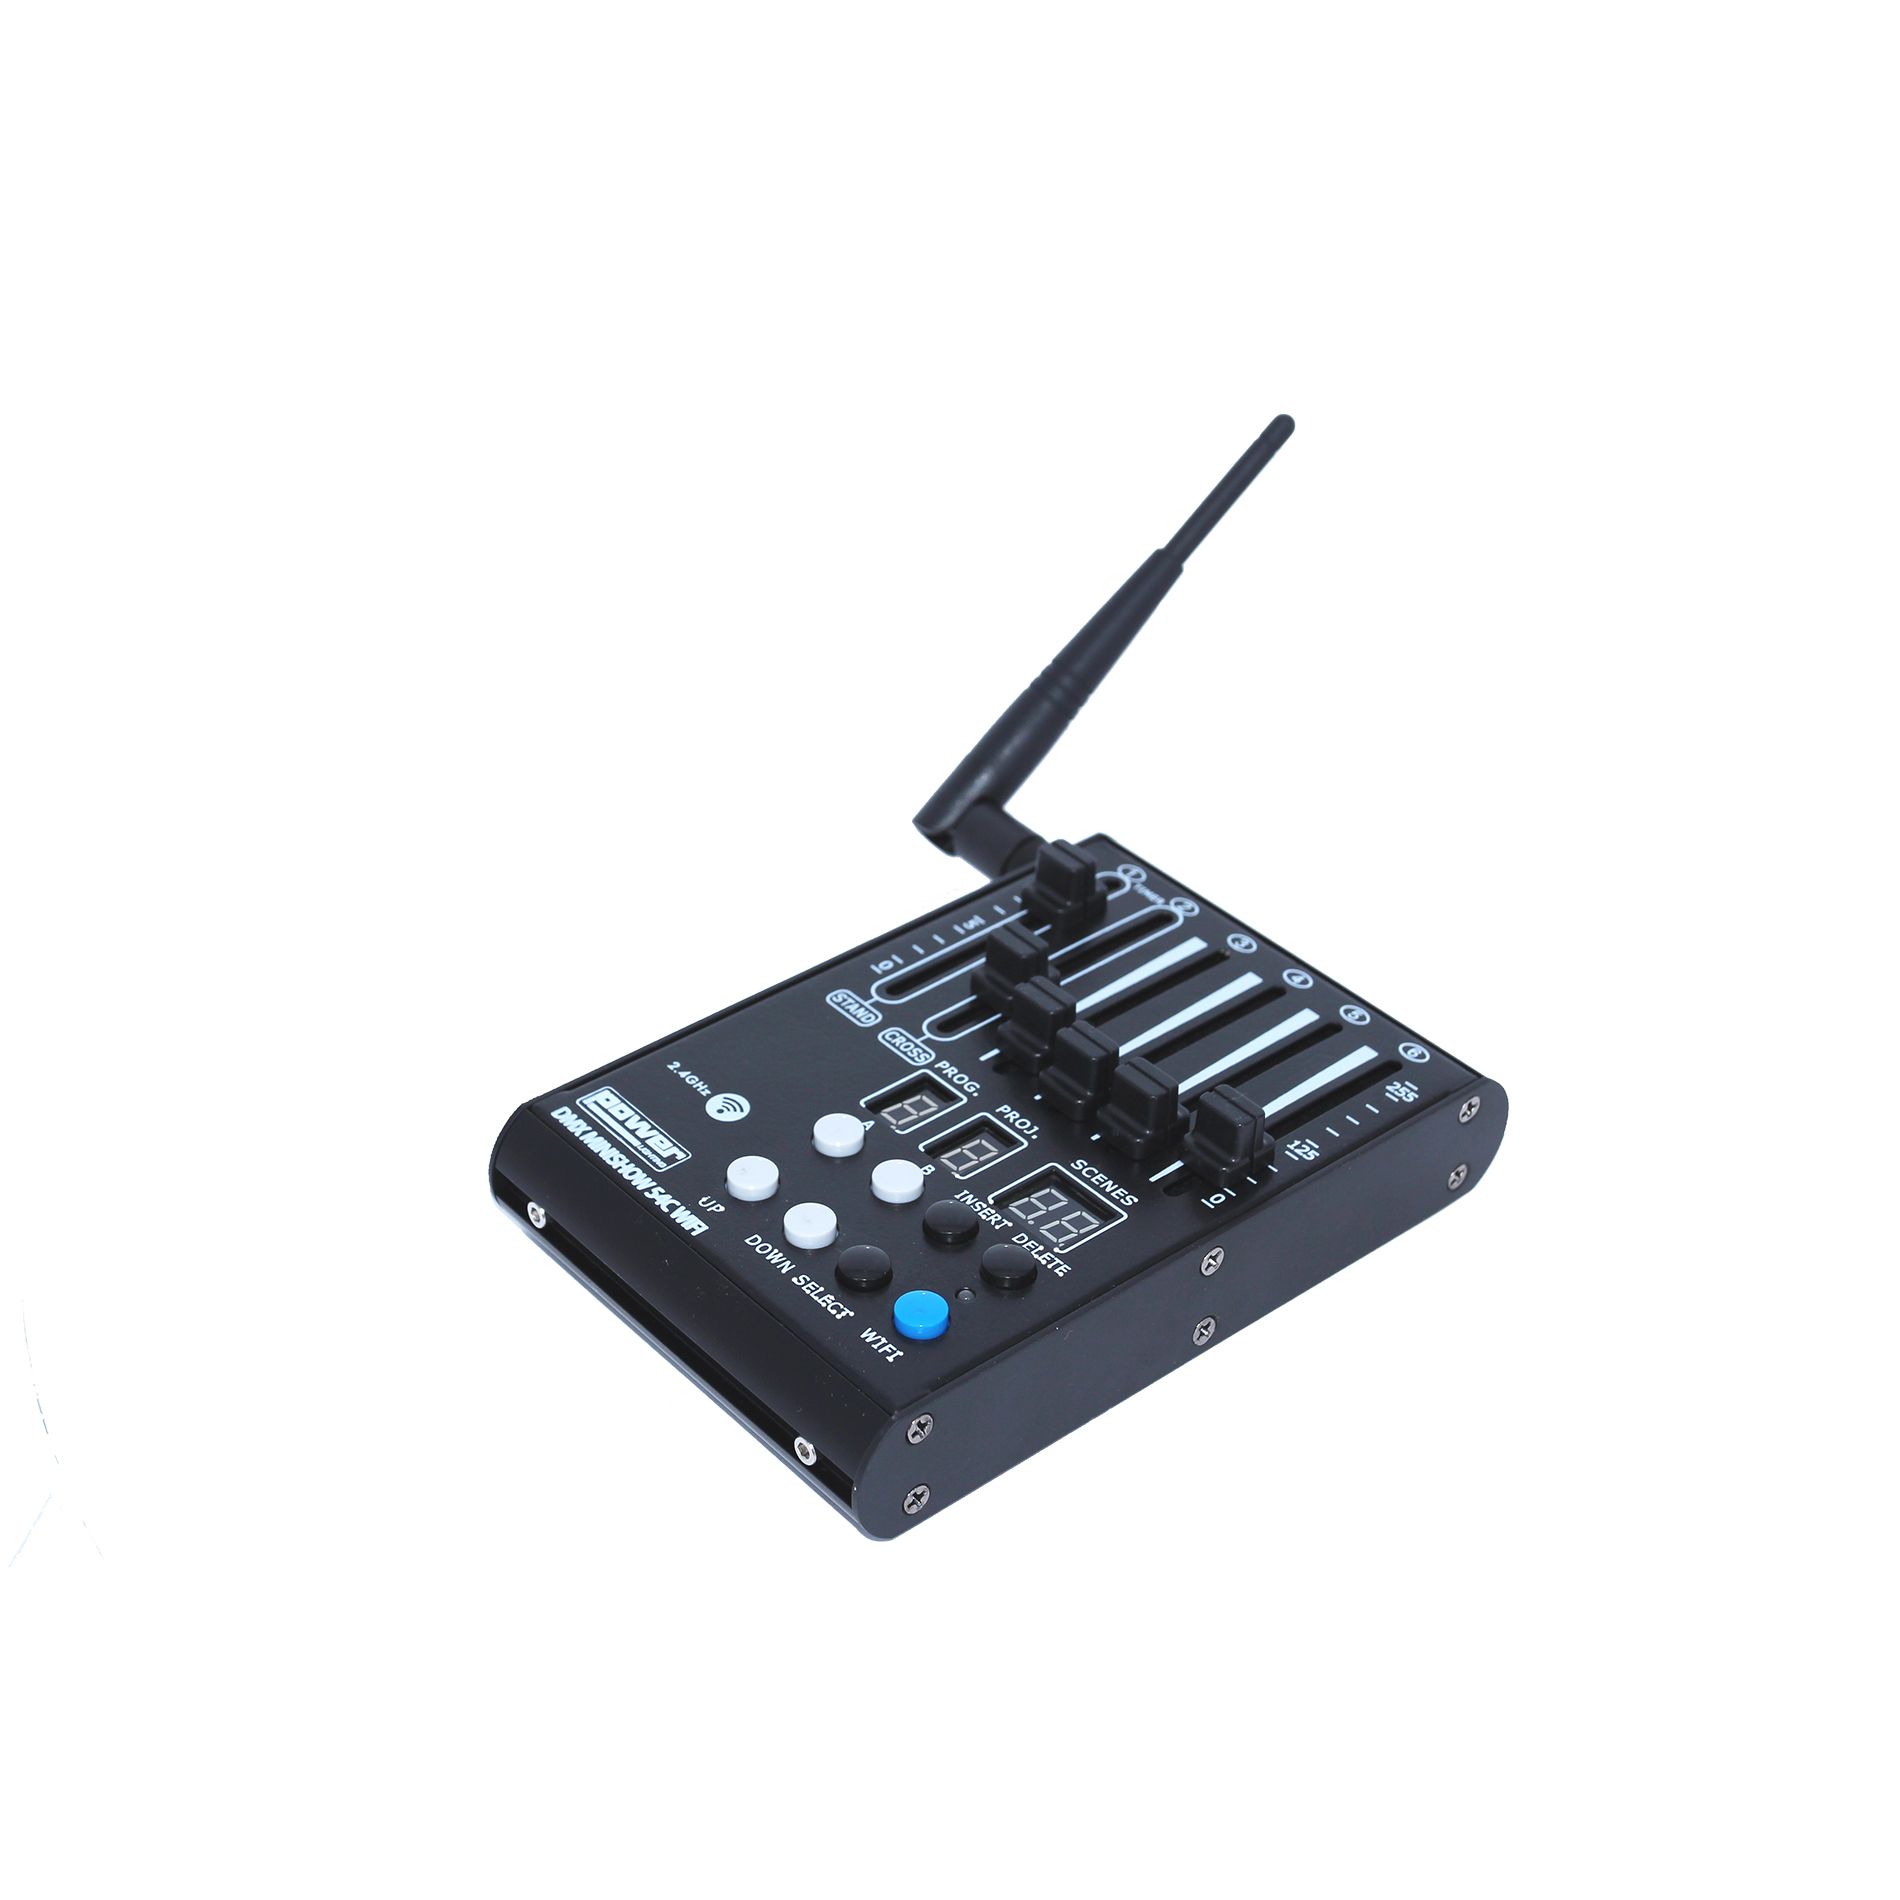 Sogetronic Dmx Minishow 54c Wifi - DMX controller - Variation 2